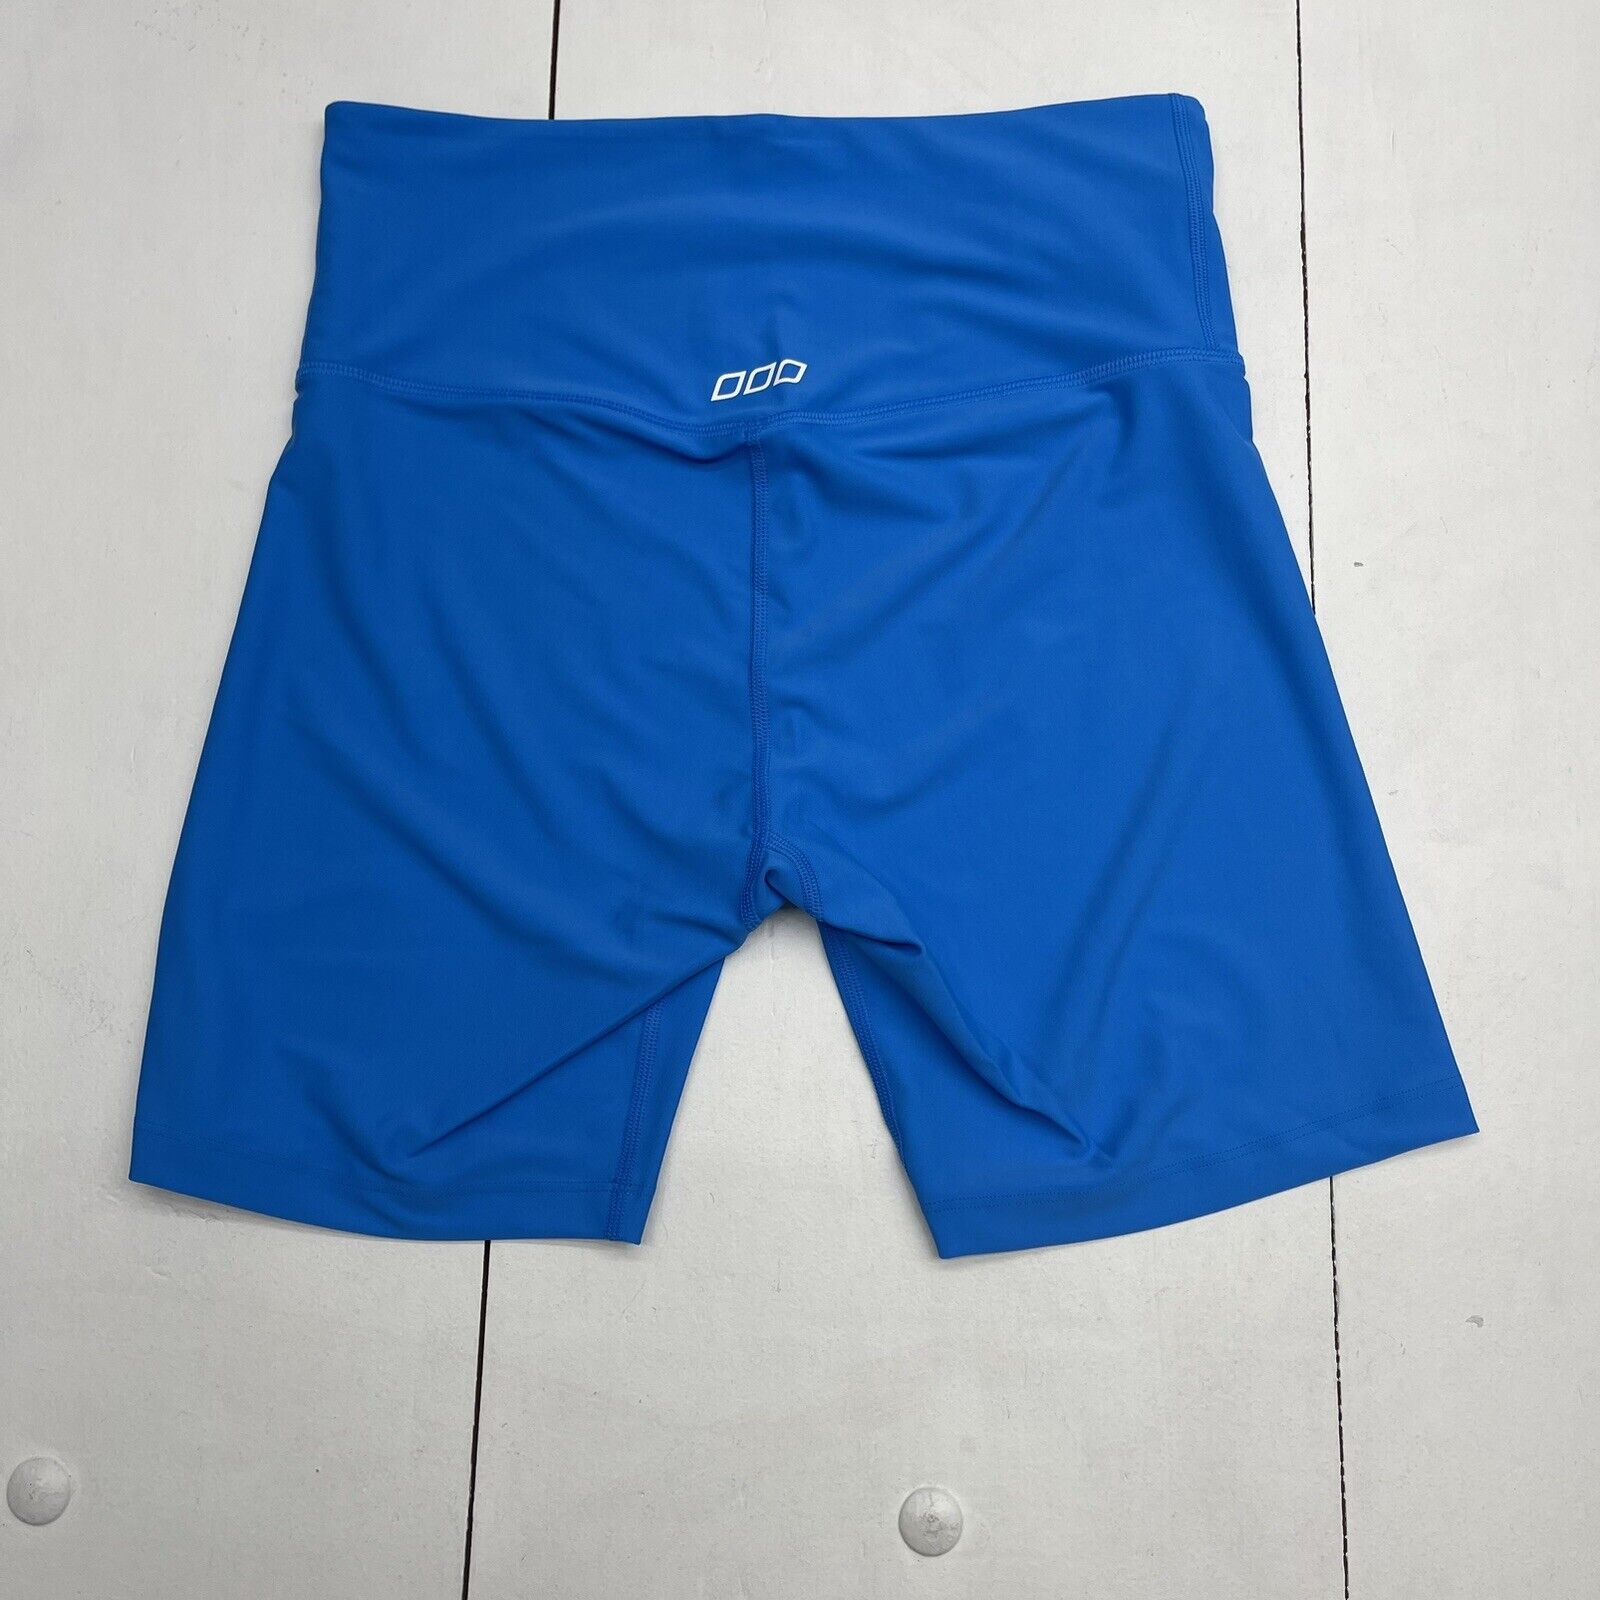 Lorna Jane Cool Touch Lotus Bike Shorts Capri Blue Women's Size Medium -  beyond exchange